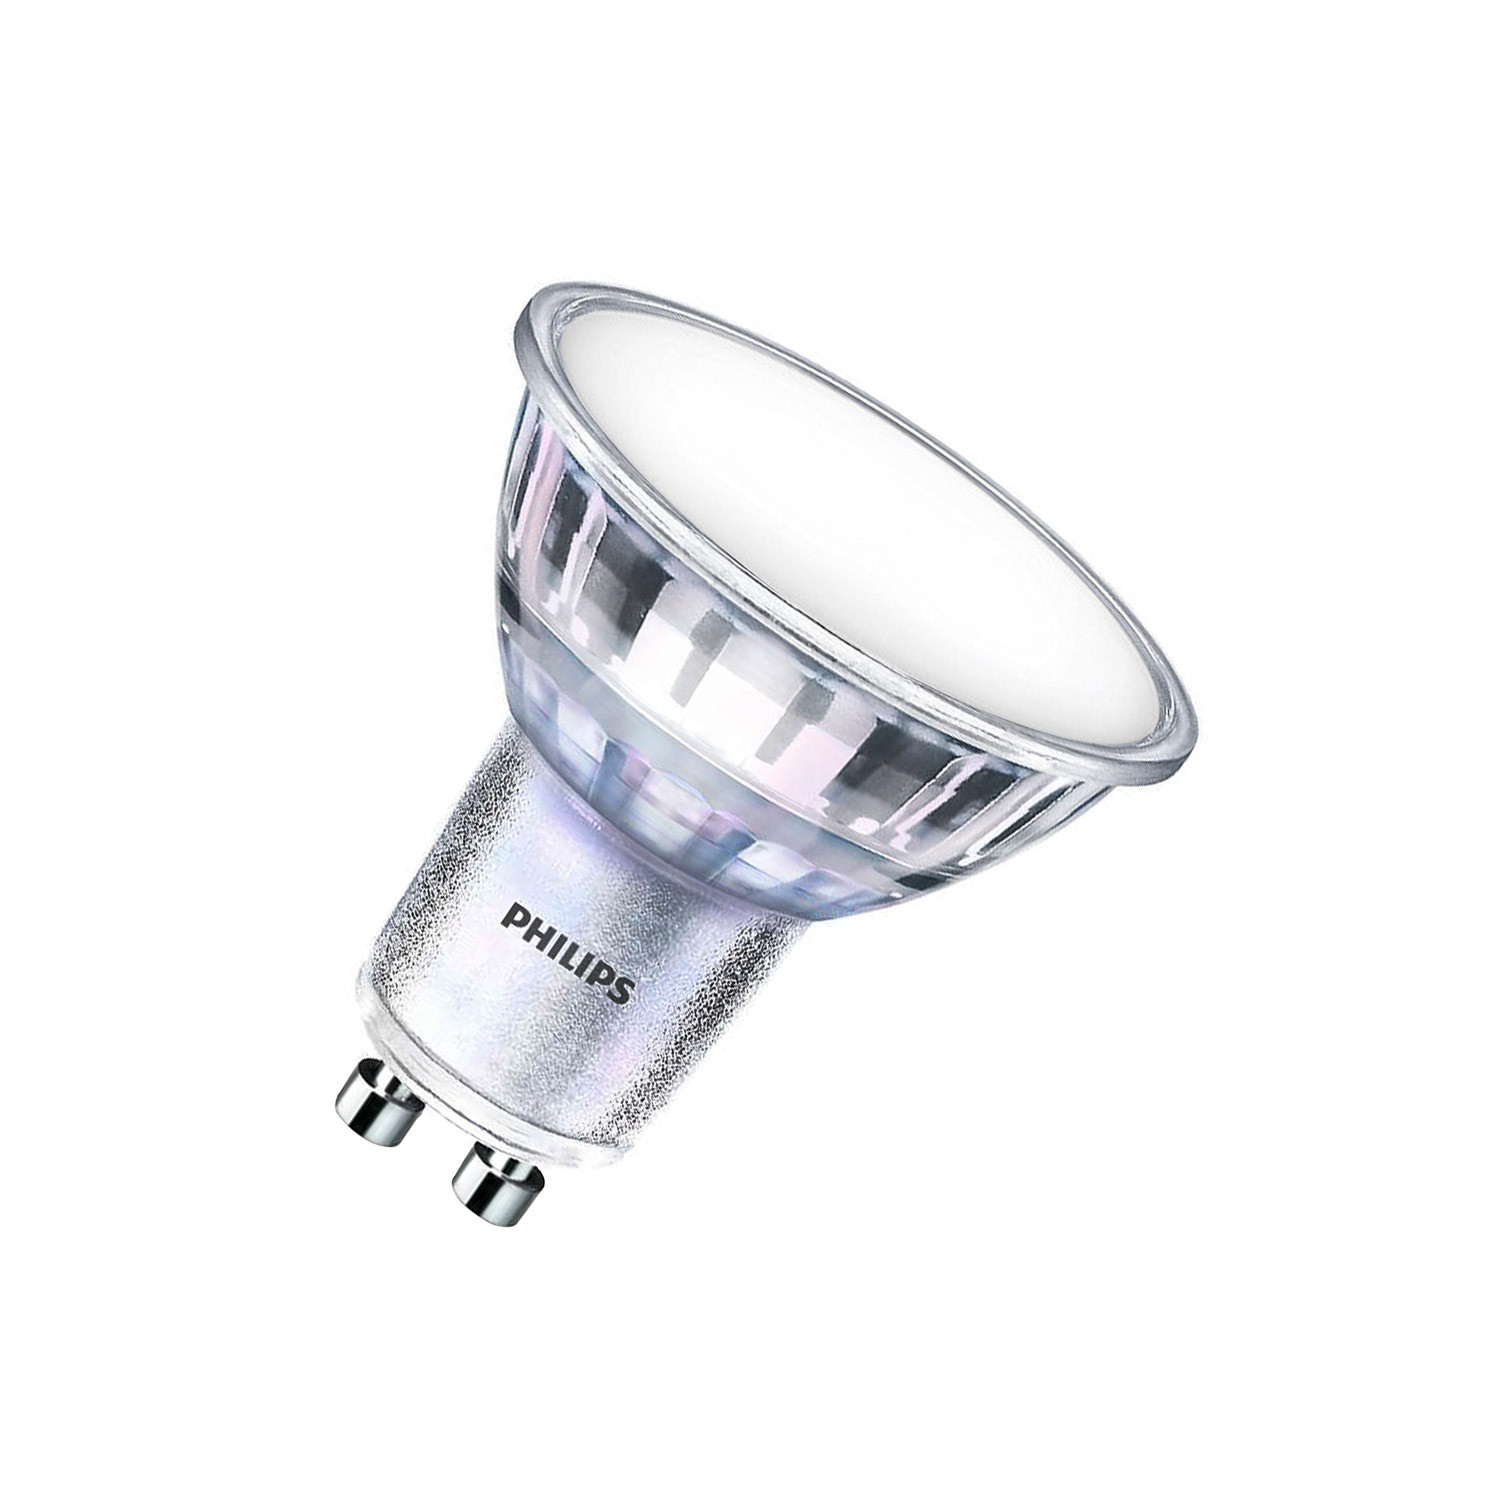 Cornwall Sleutel Versterken LED lamp GU10 120° 5W Philips CorePro spot MV LED lamp - Ledkia